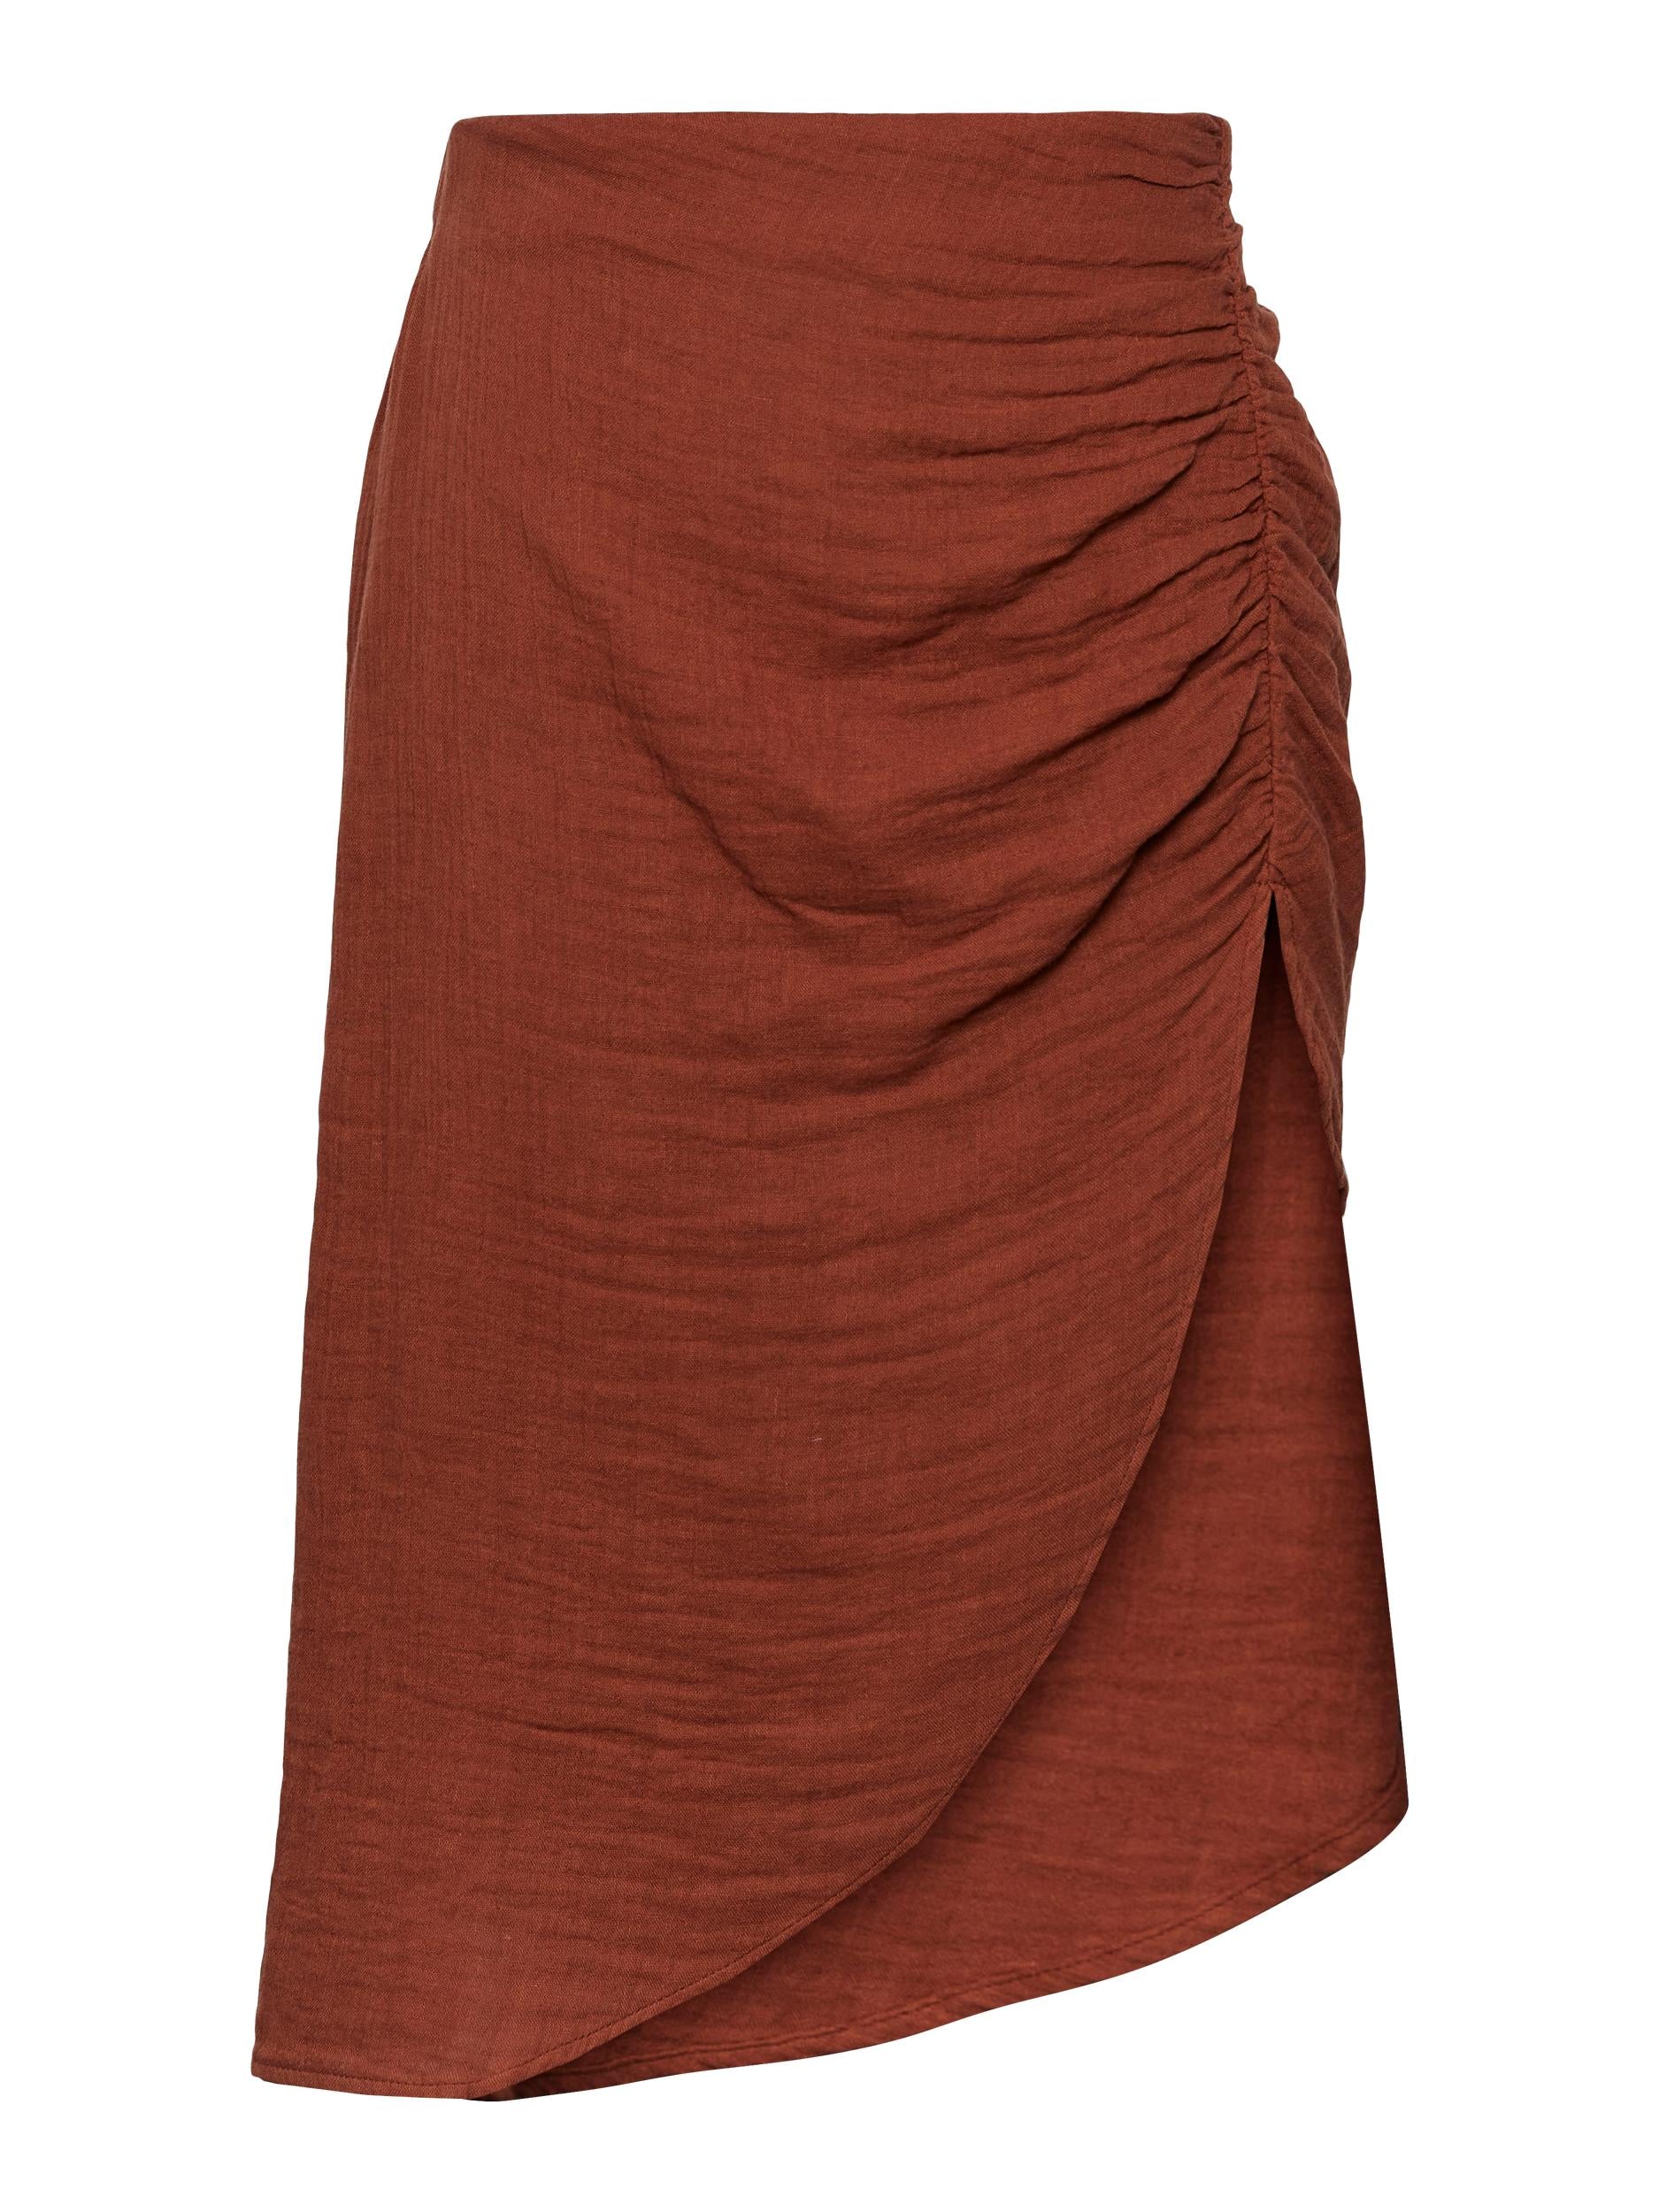 Brown midi skirt pieces